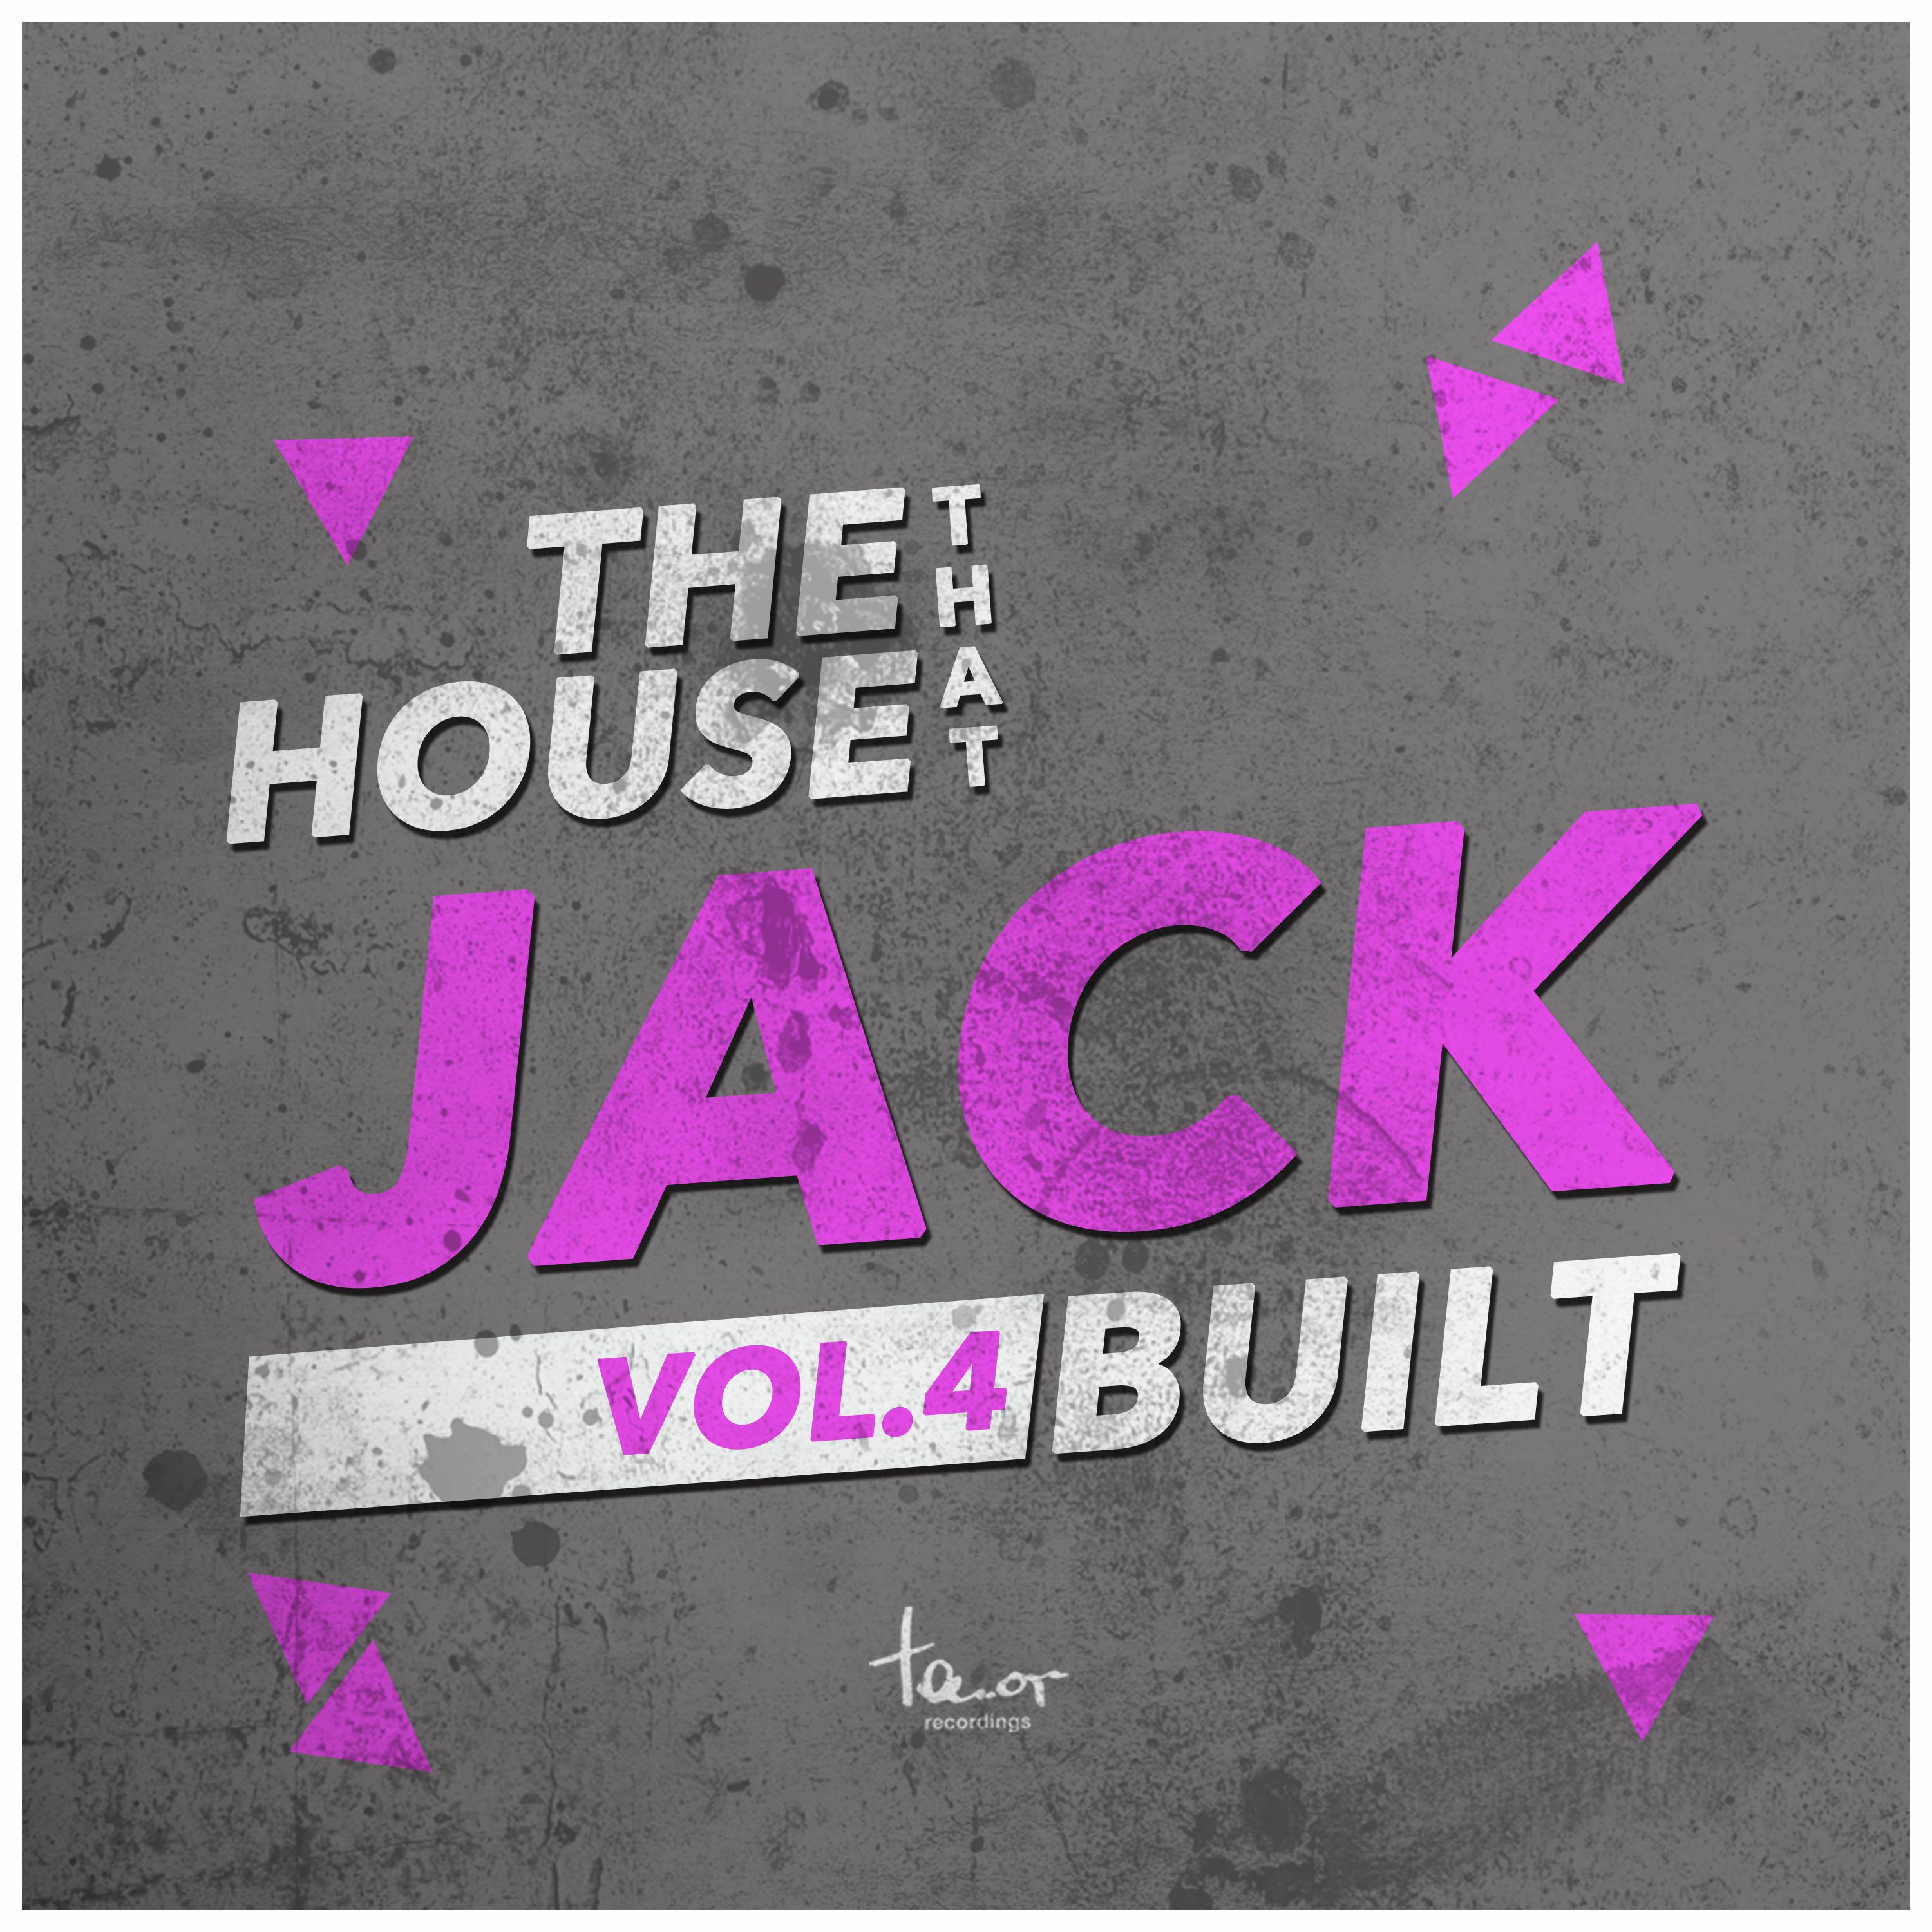 The House That Jack Built, Vol. 4